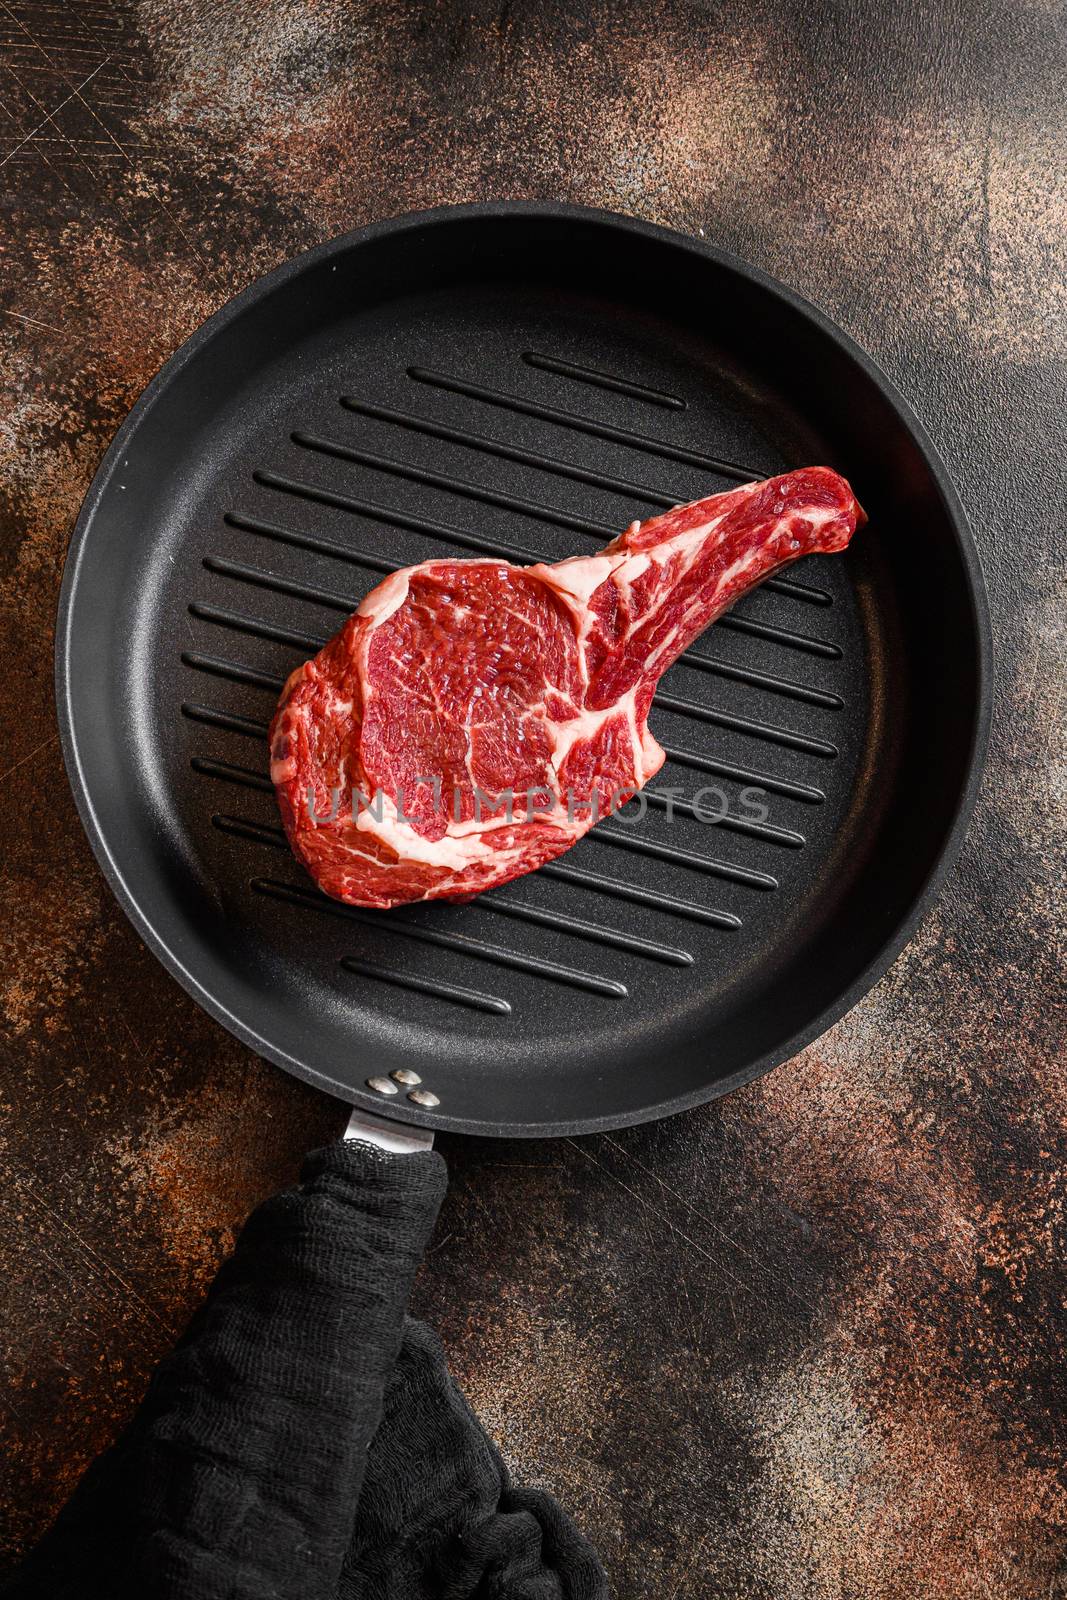 Bone In Steak on the grill pan skillet or Dallas steak raw top view. ove rustic metal dark background table by Ilianesolenyi